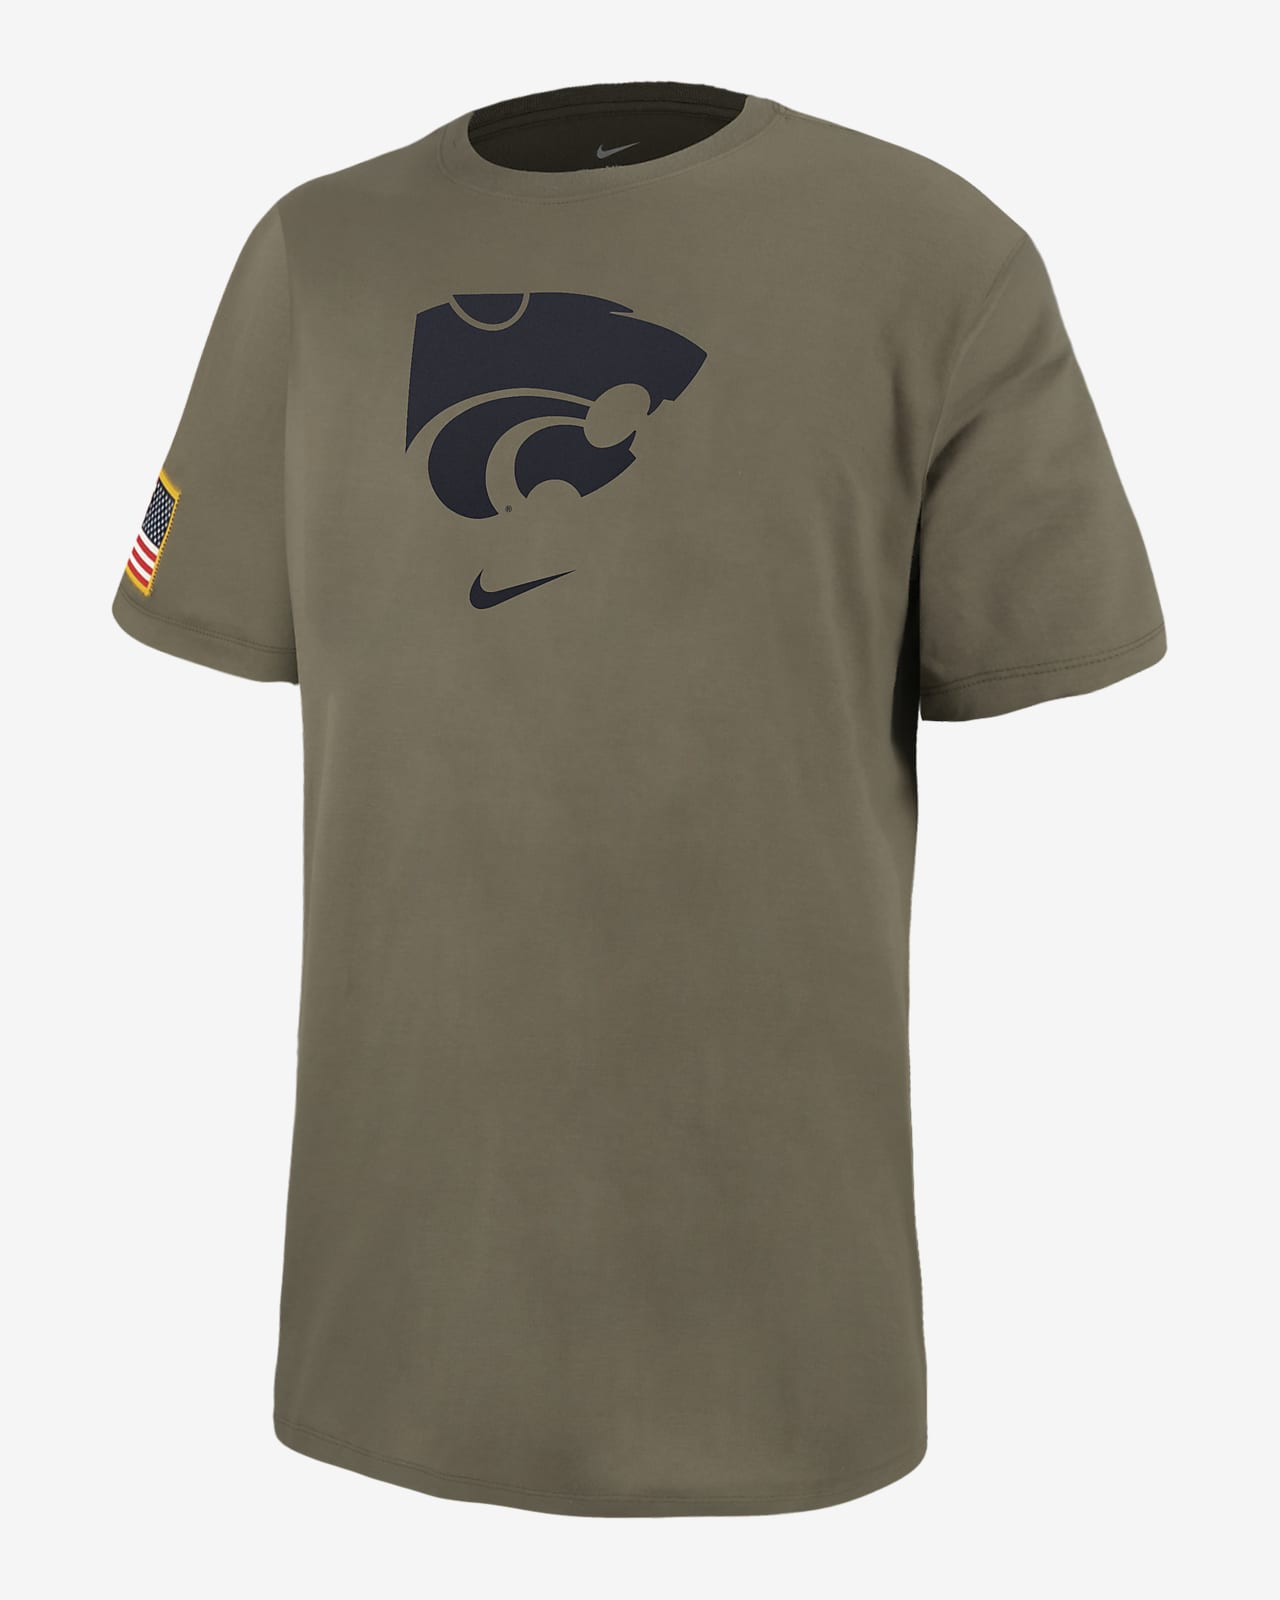 Playera Nike College para hombre Kansas State